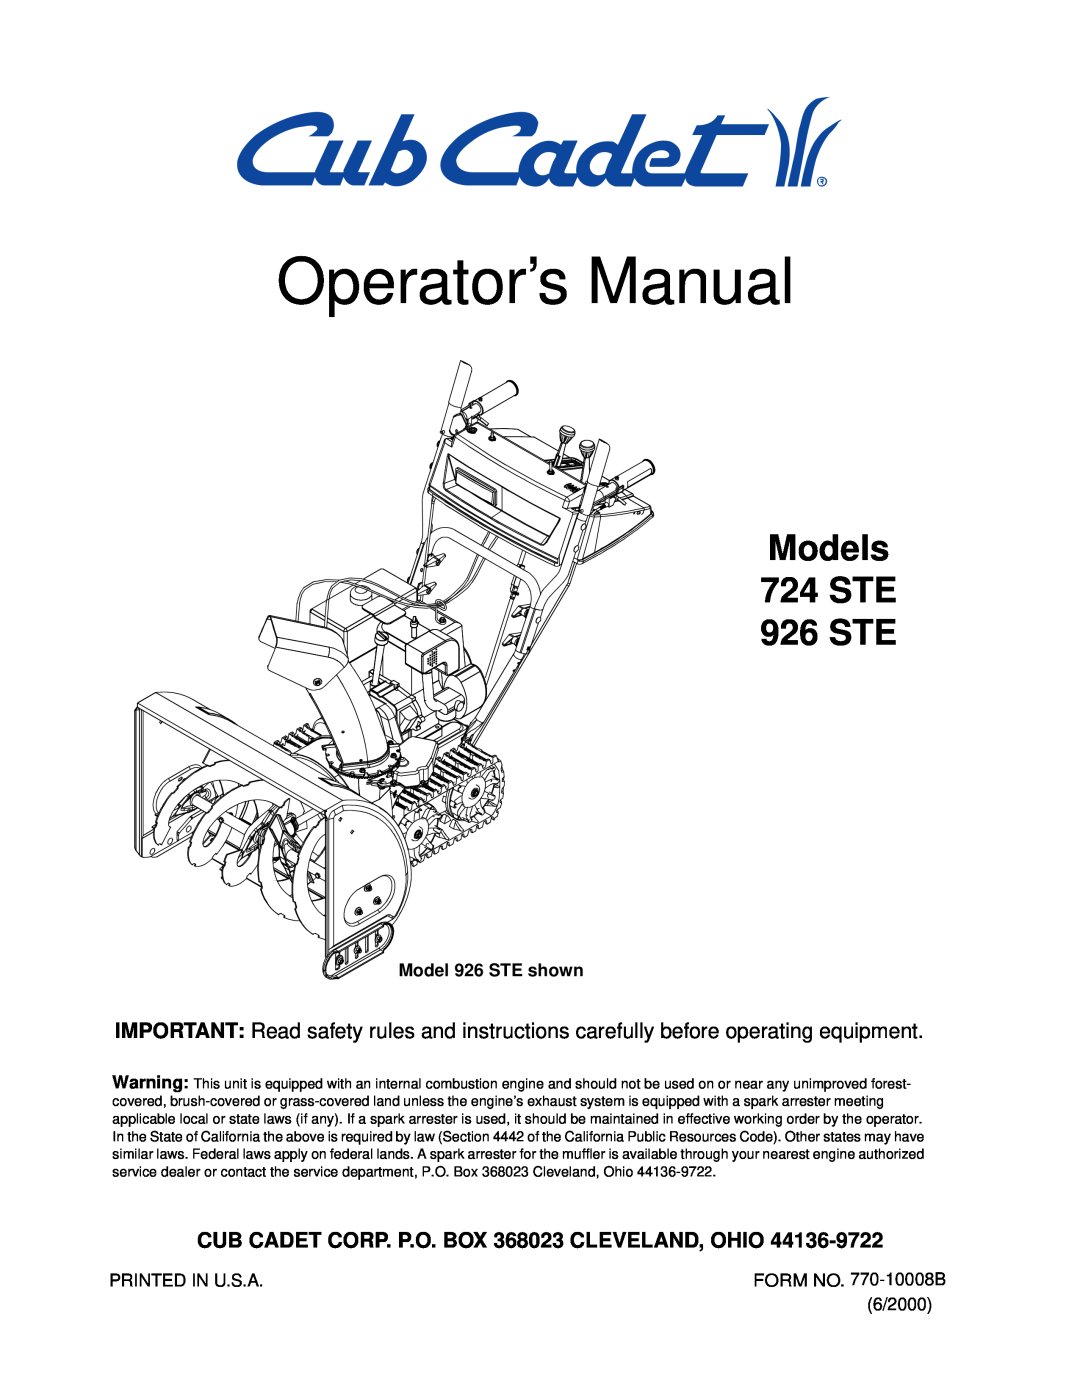 Cub Cadet 724 STE manual CUB CADET CORP. P.O. BOX 368023 CLEVELAND, OHIO, Model 926 STE shown, Operator’s Manual 